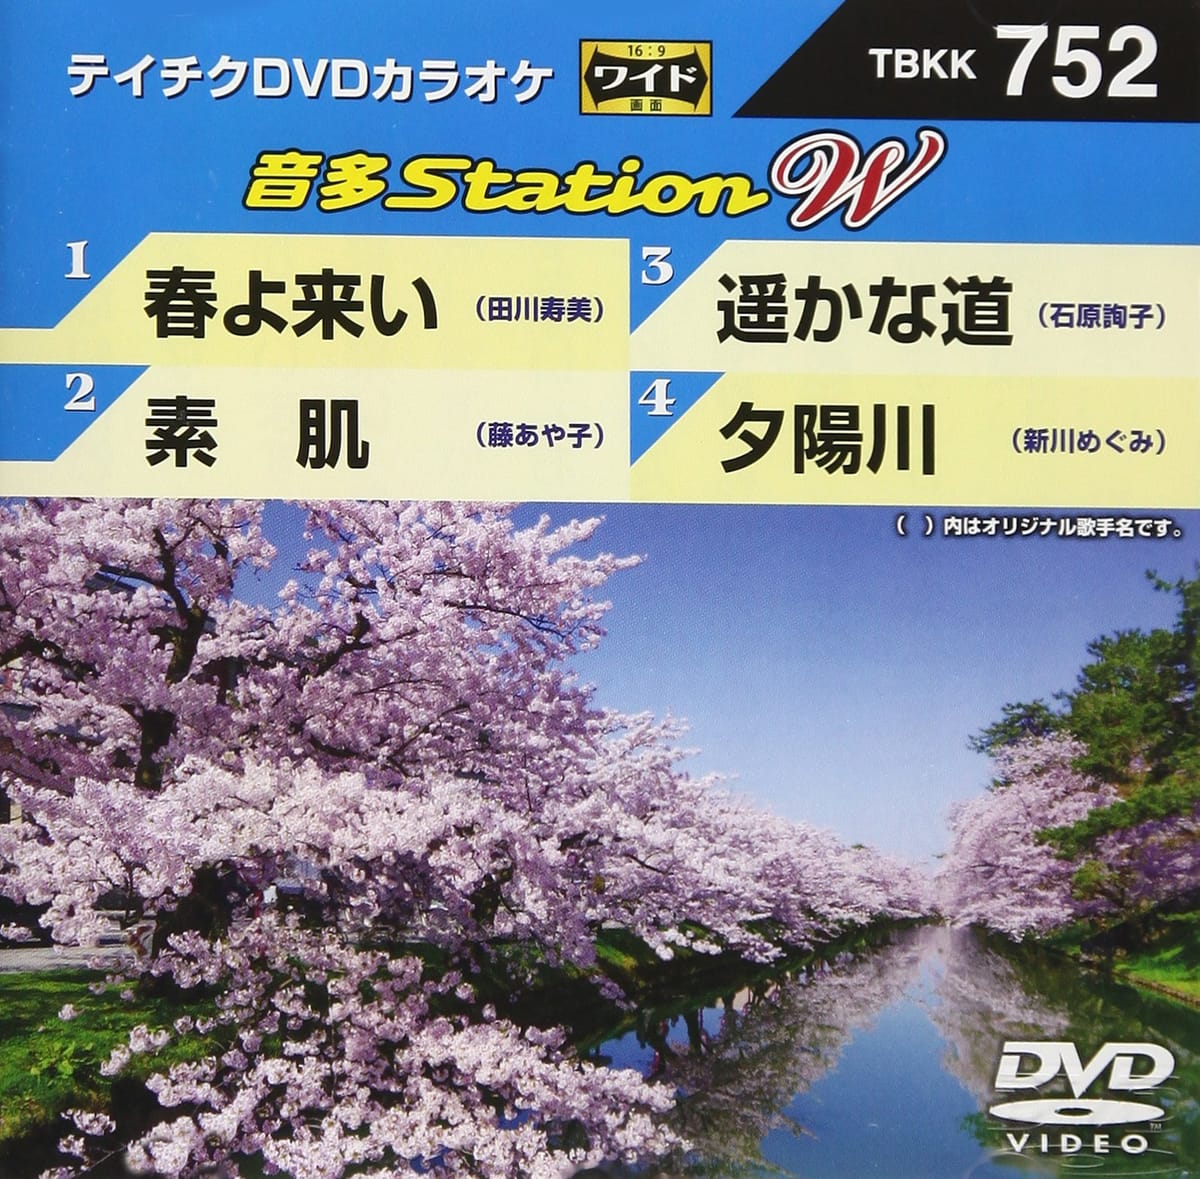 eC`NDVDJIP@Station@W@752 [DVD]